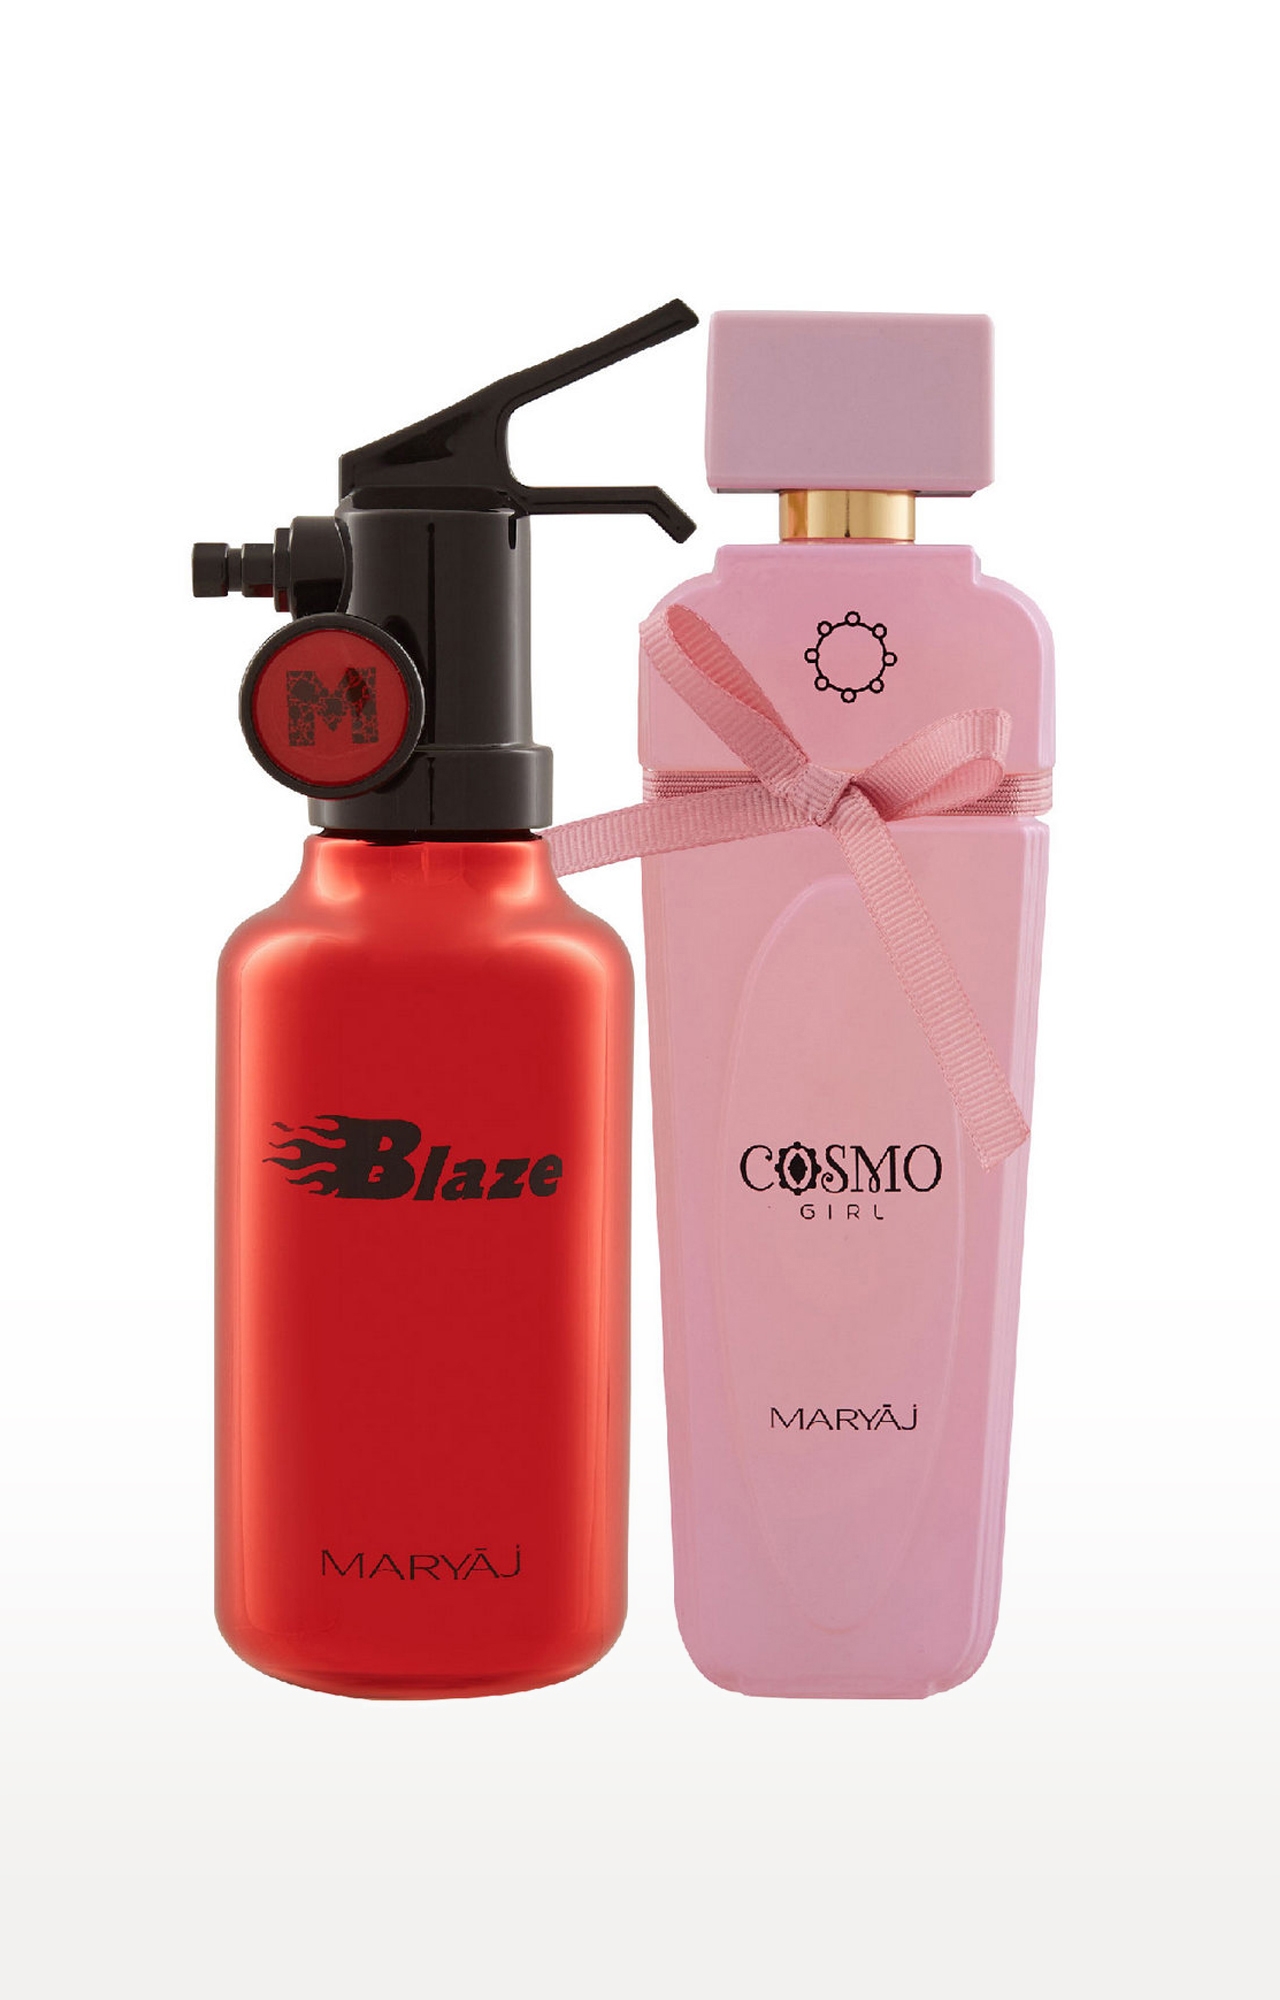 Maryaj | Maryaj Blaze Eau De Parfum Citrus Aromatic Perfume 100ml for Men and Maryaj Cosmo Girl Eau De Parfum Floral Powdery Perfume 100ml for Women